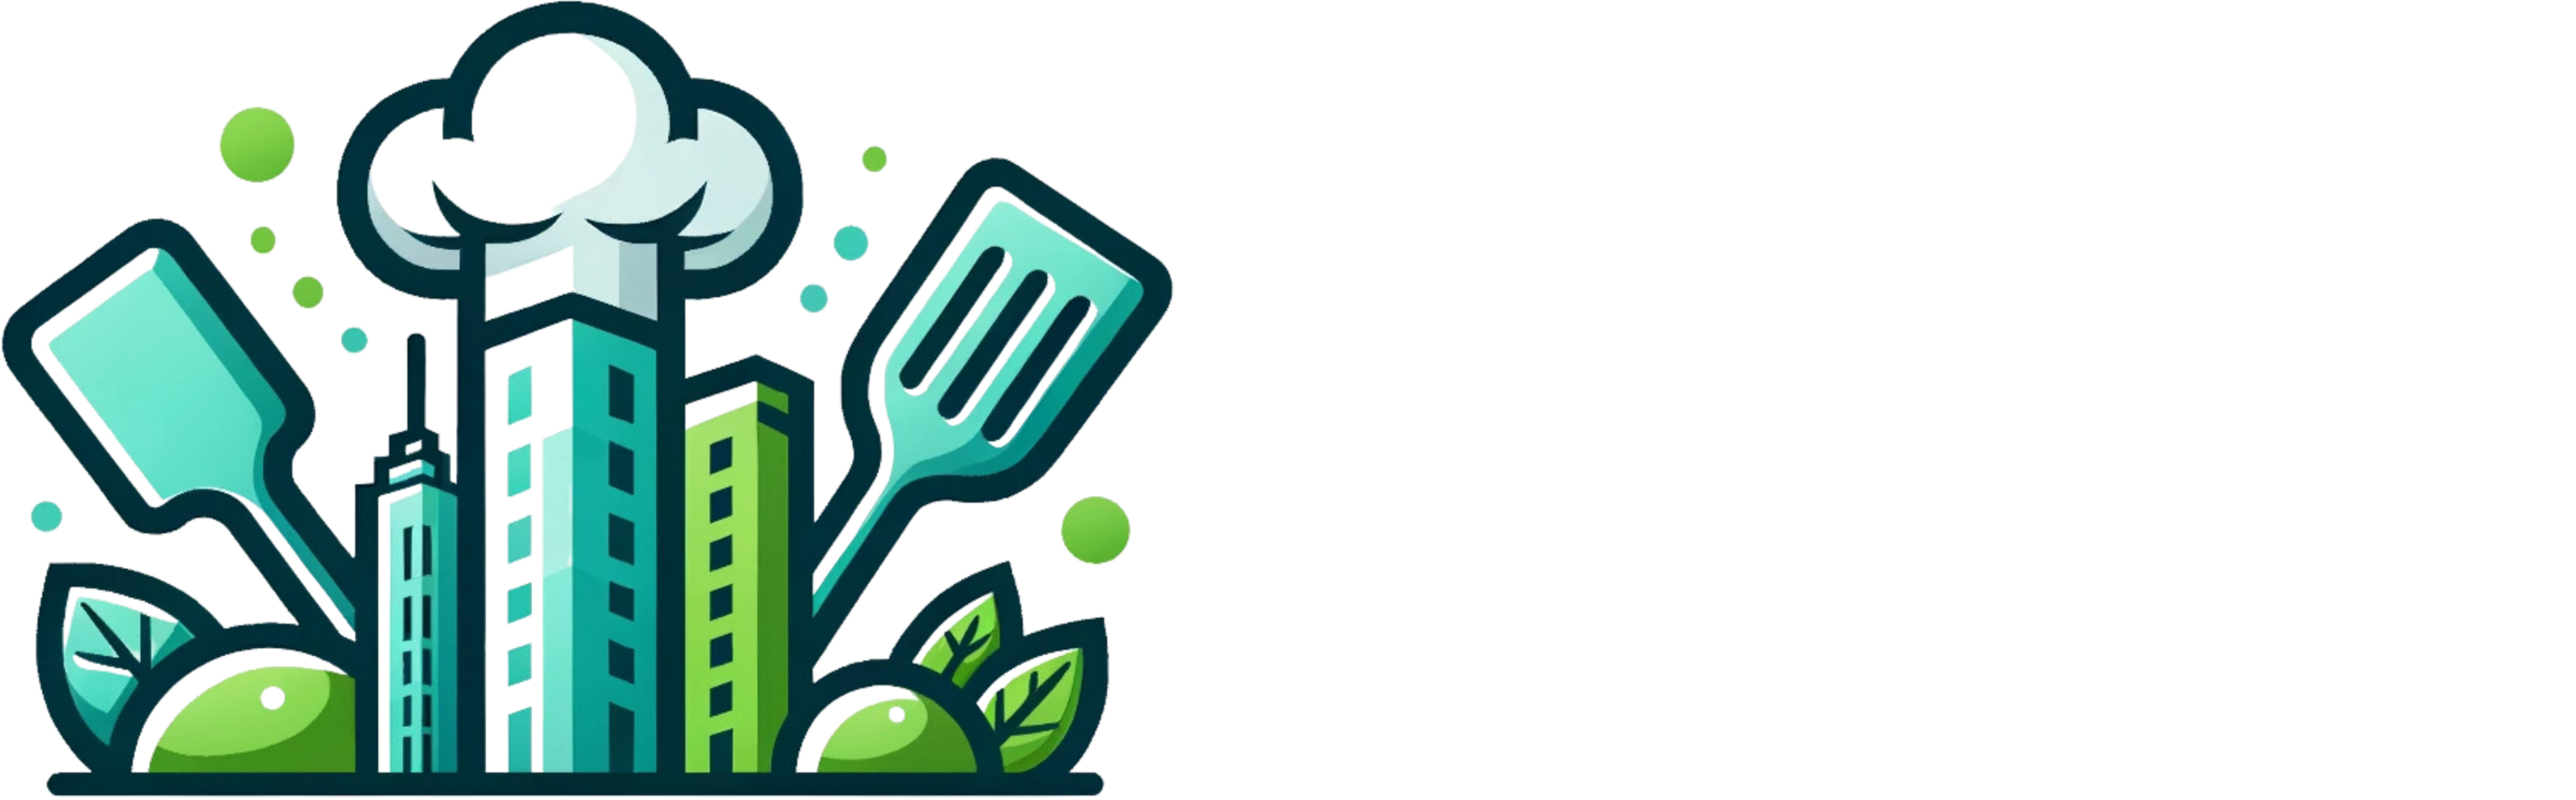 Recetas city logo 6